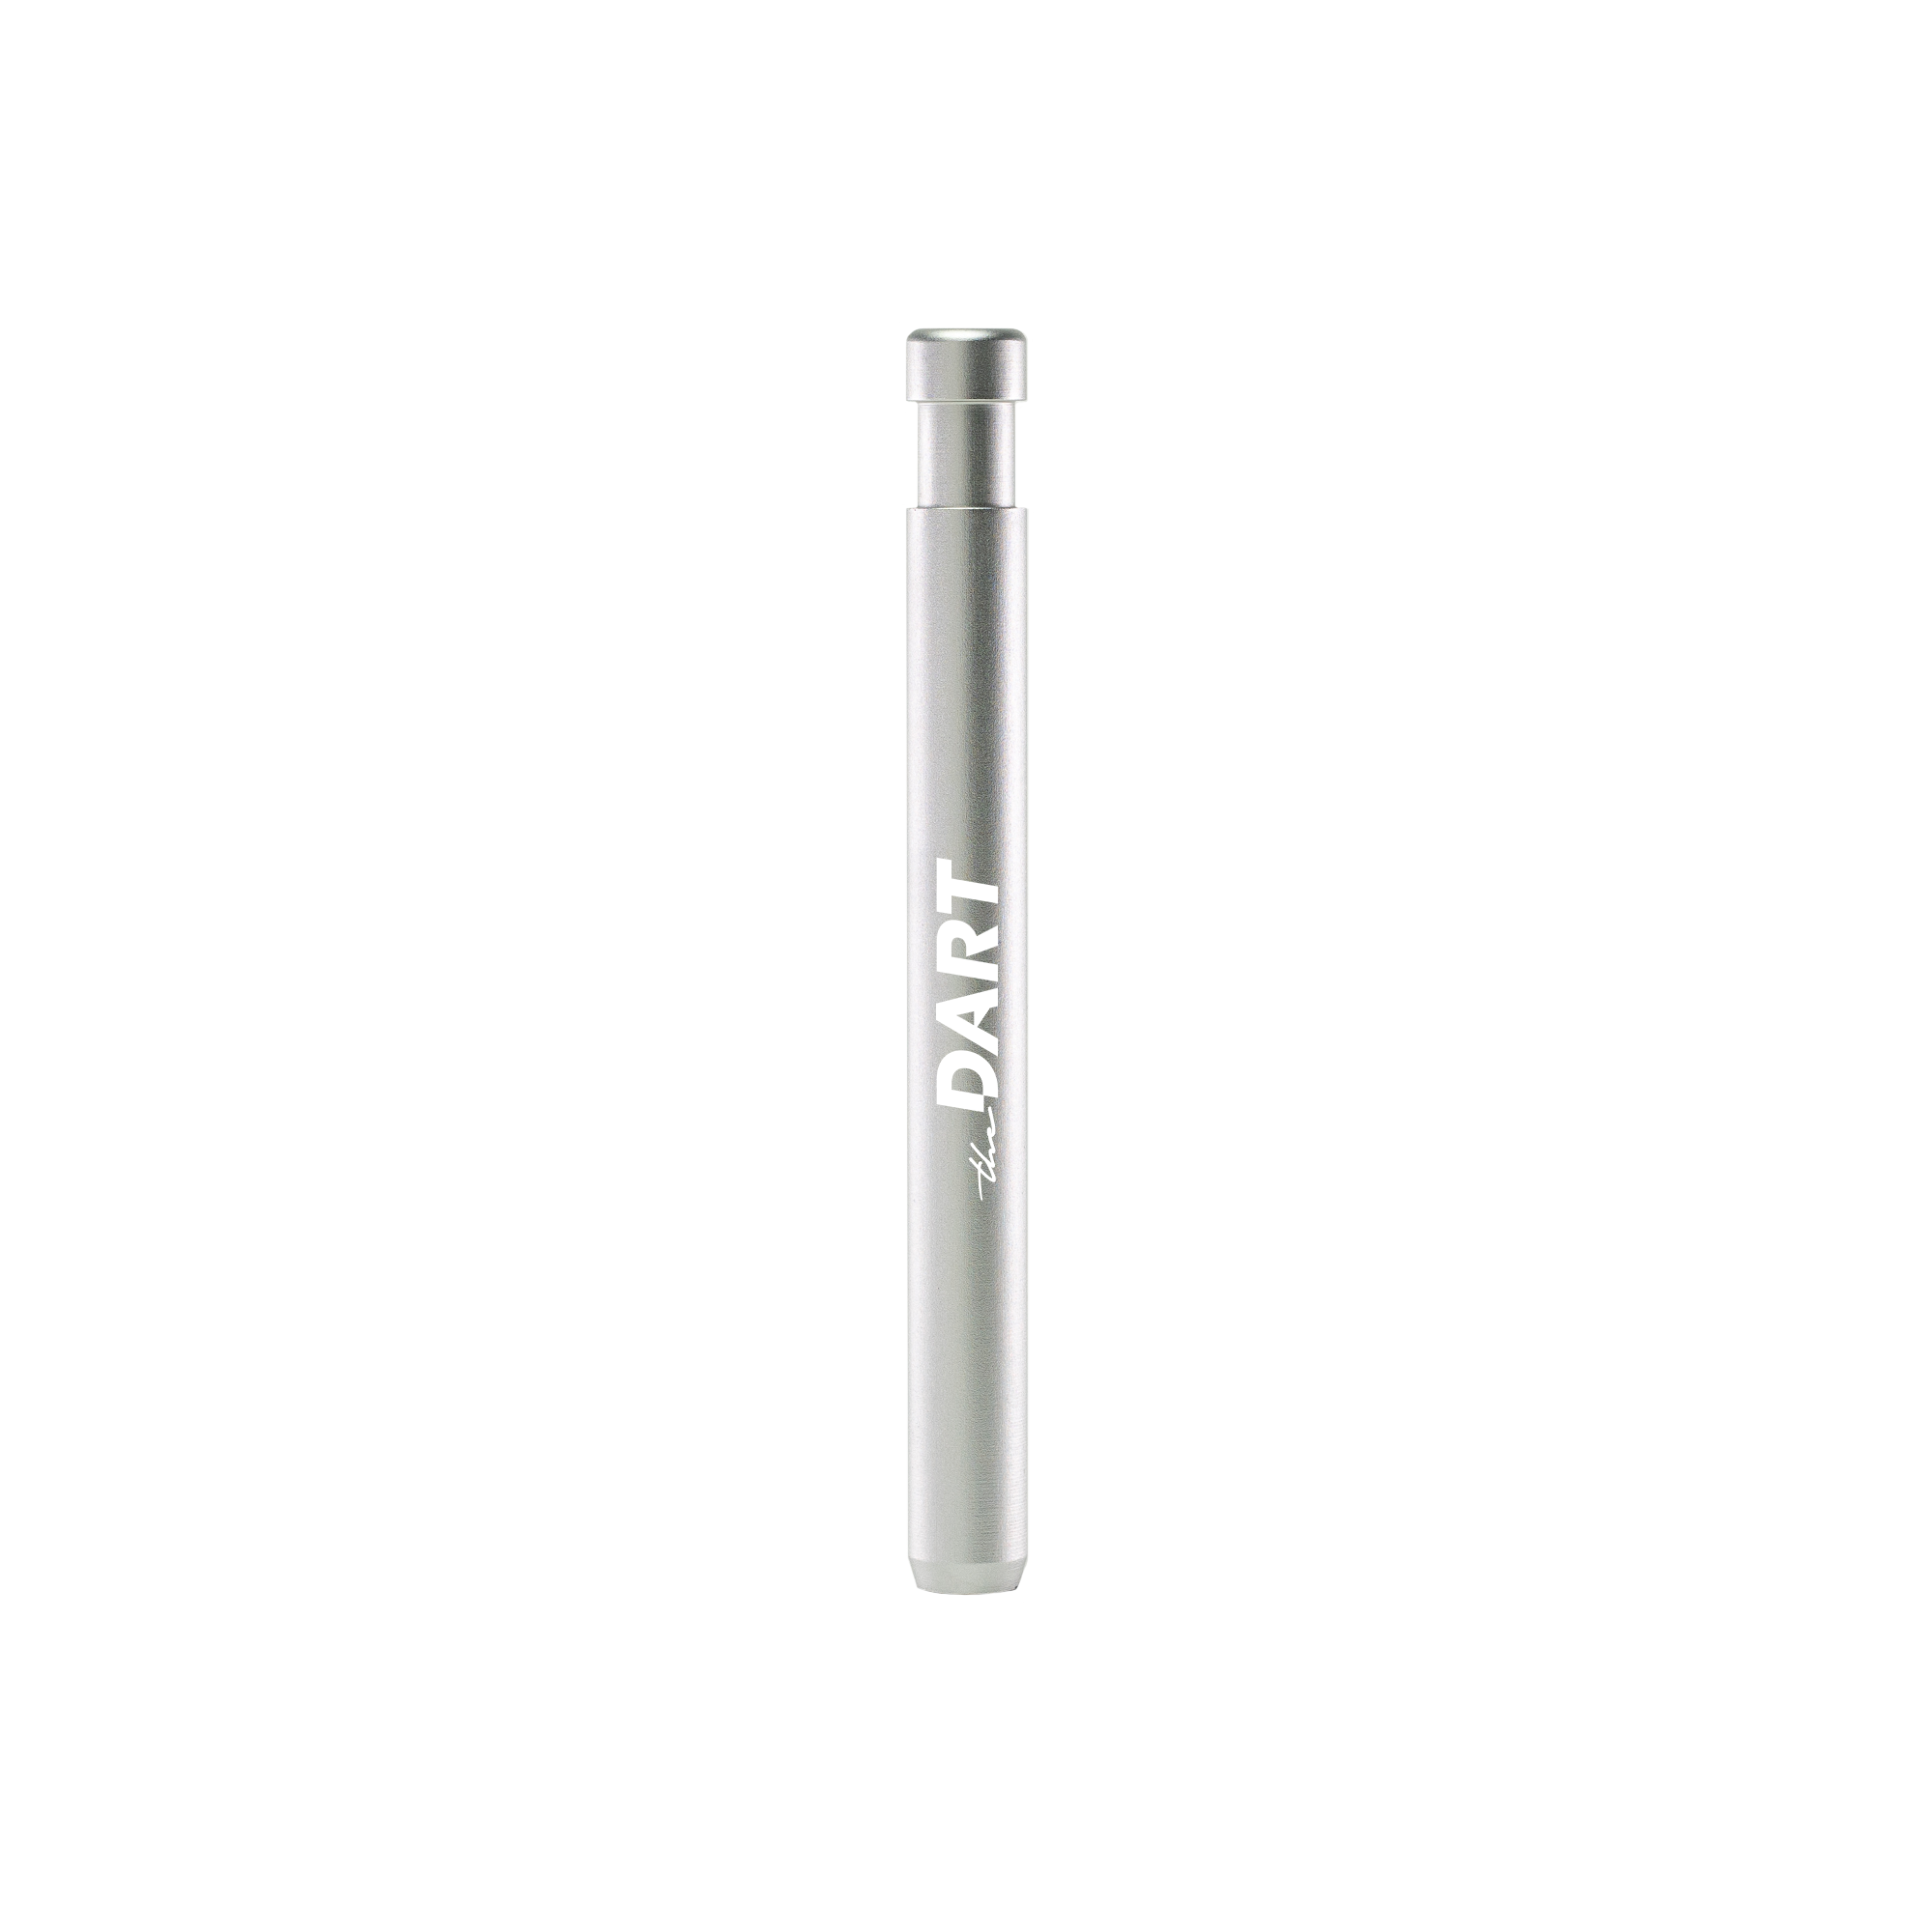 FREE Vape Pen Included with Magnetic Vape Pen Stand/Holder-Stoner